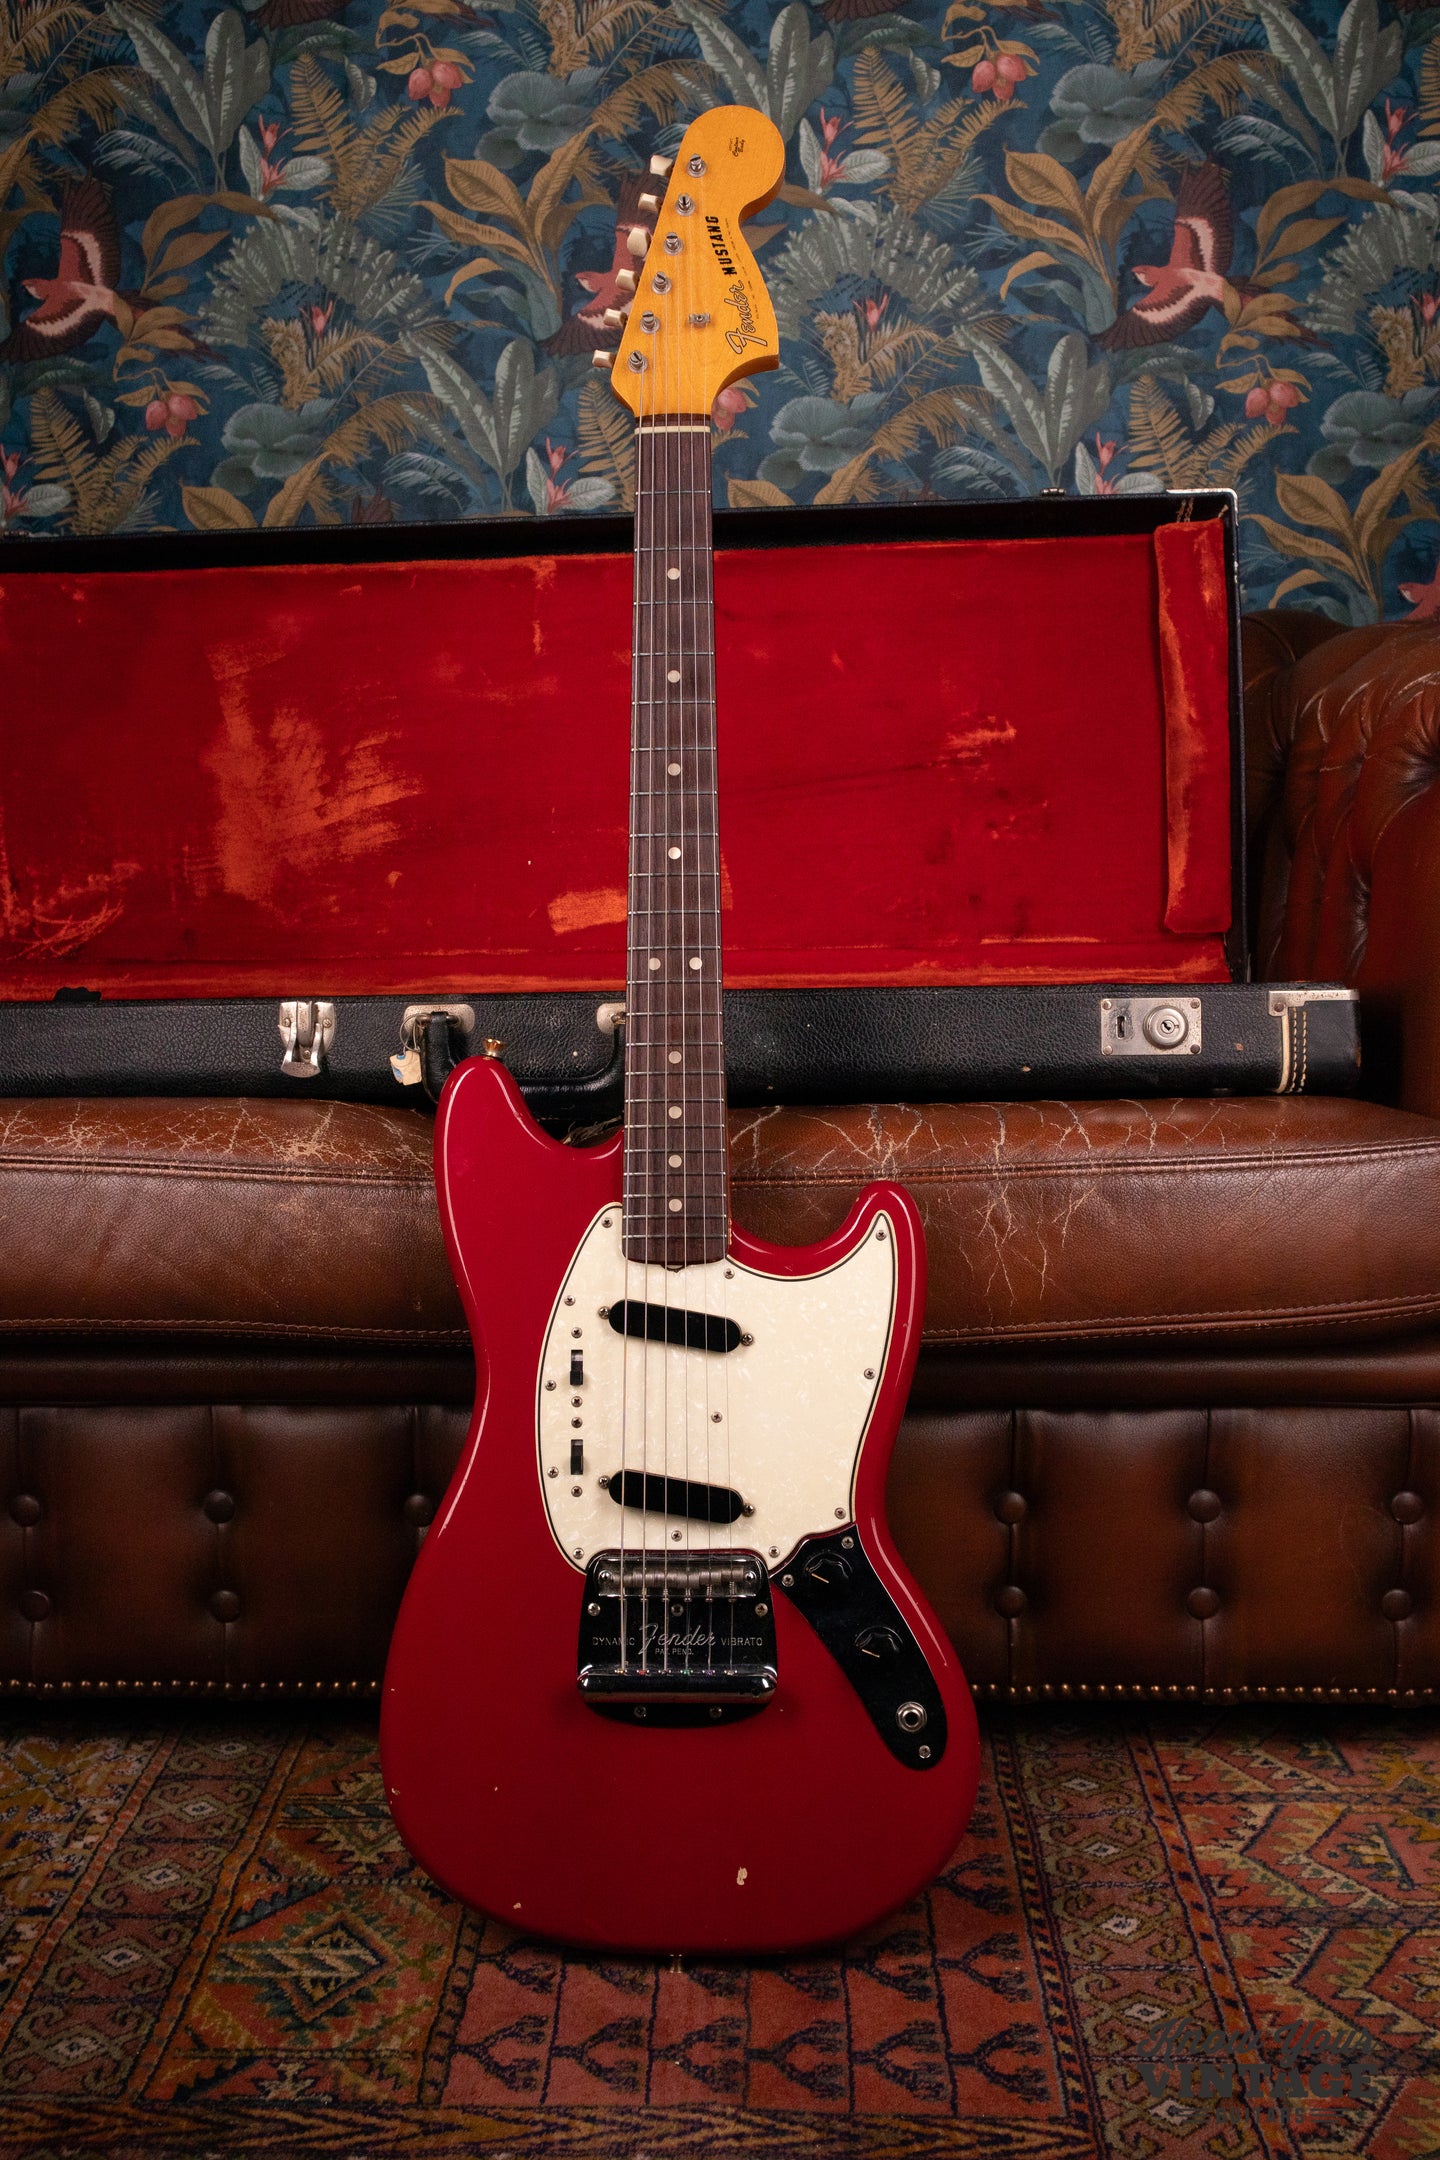 1965 Fender Mustang Red